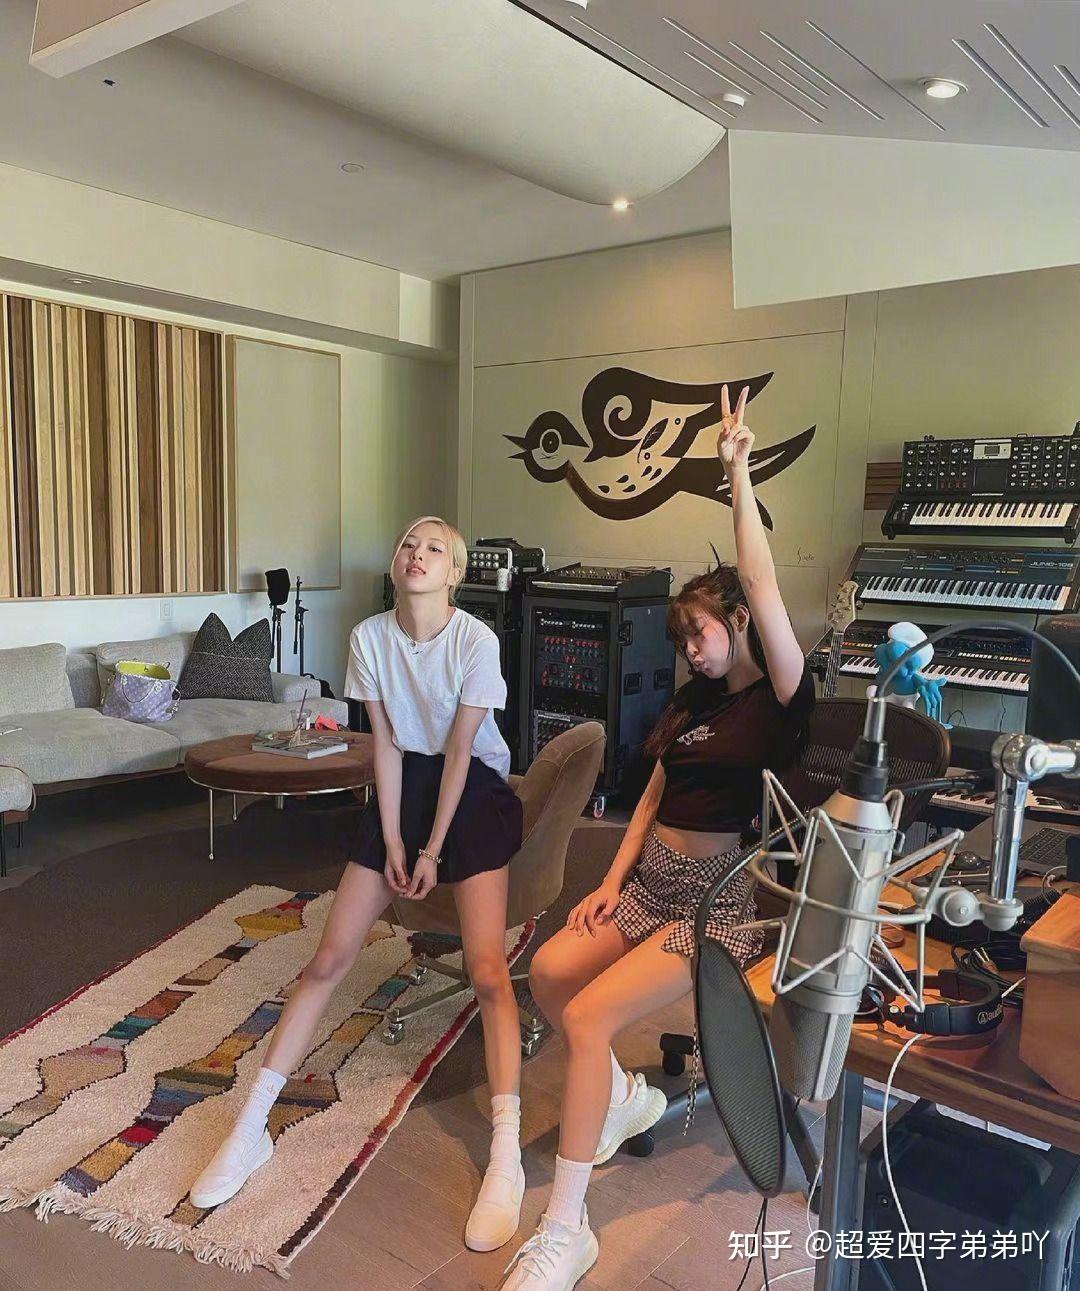 jennie&rosé在ryan tedder录音室合照 !要合作录歌了! 